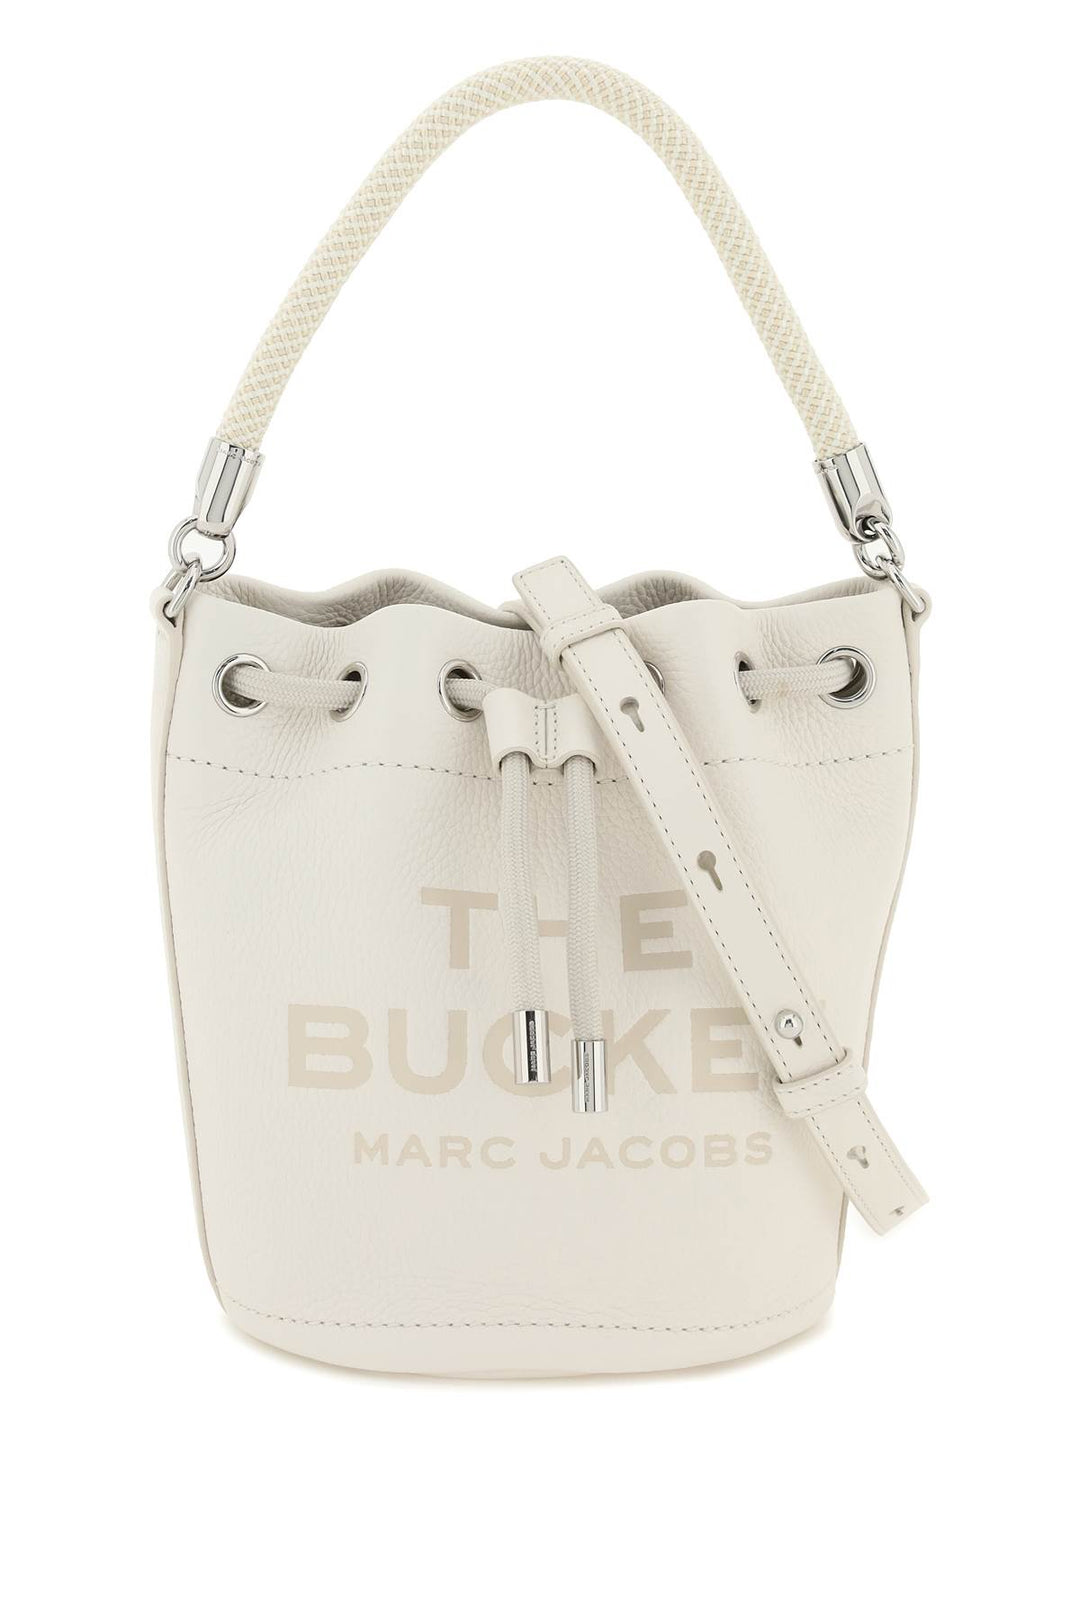 Borsa 'The Leather Bucket' - Marc Jacobs - Donna